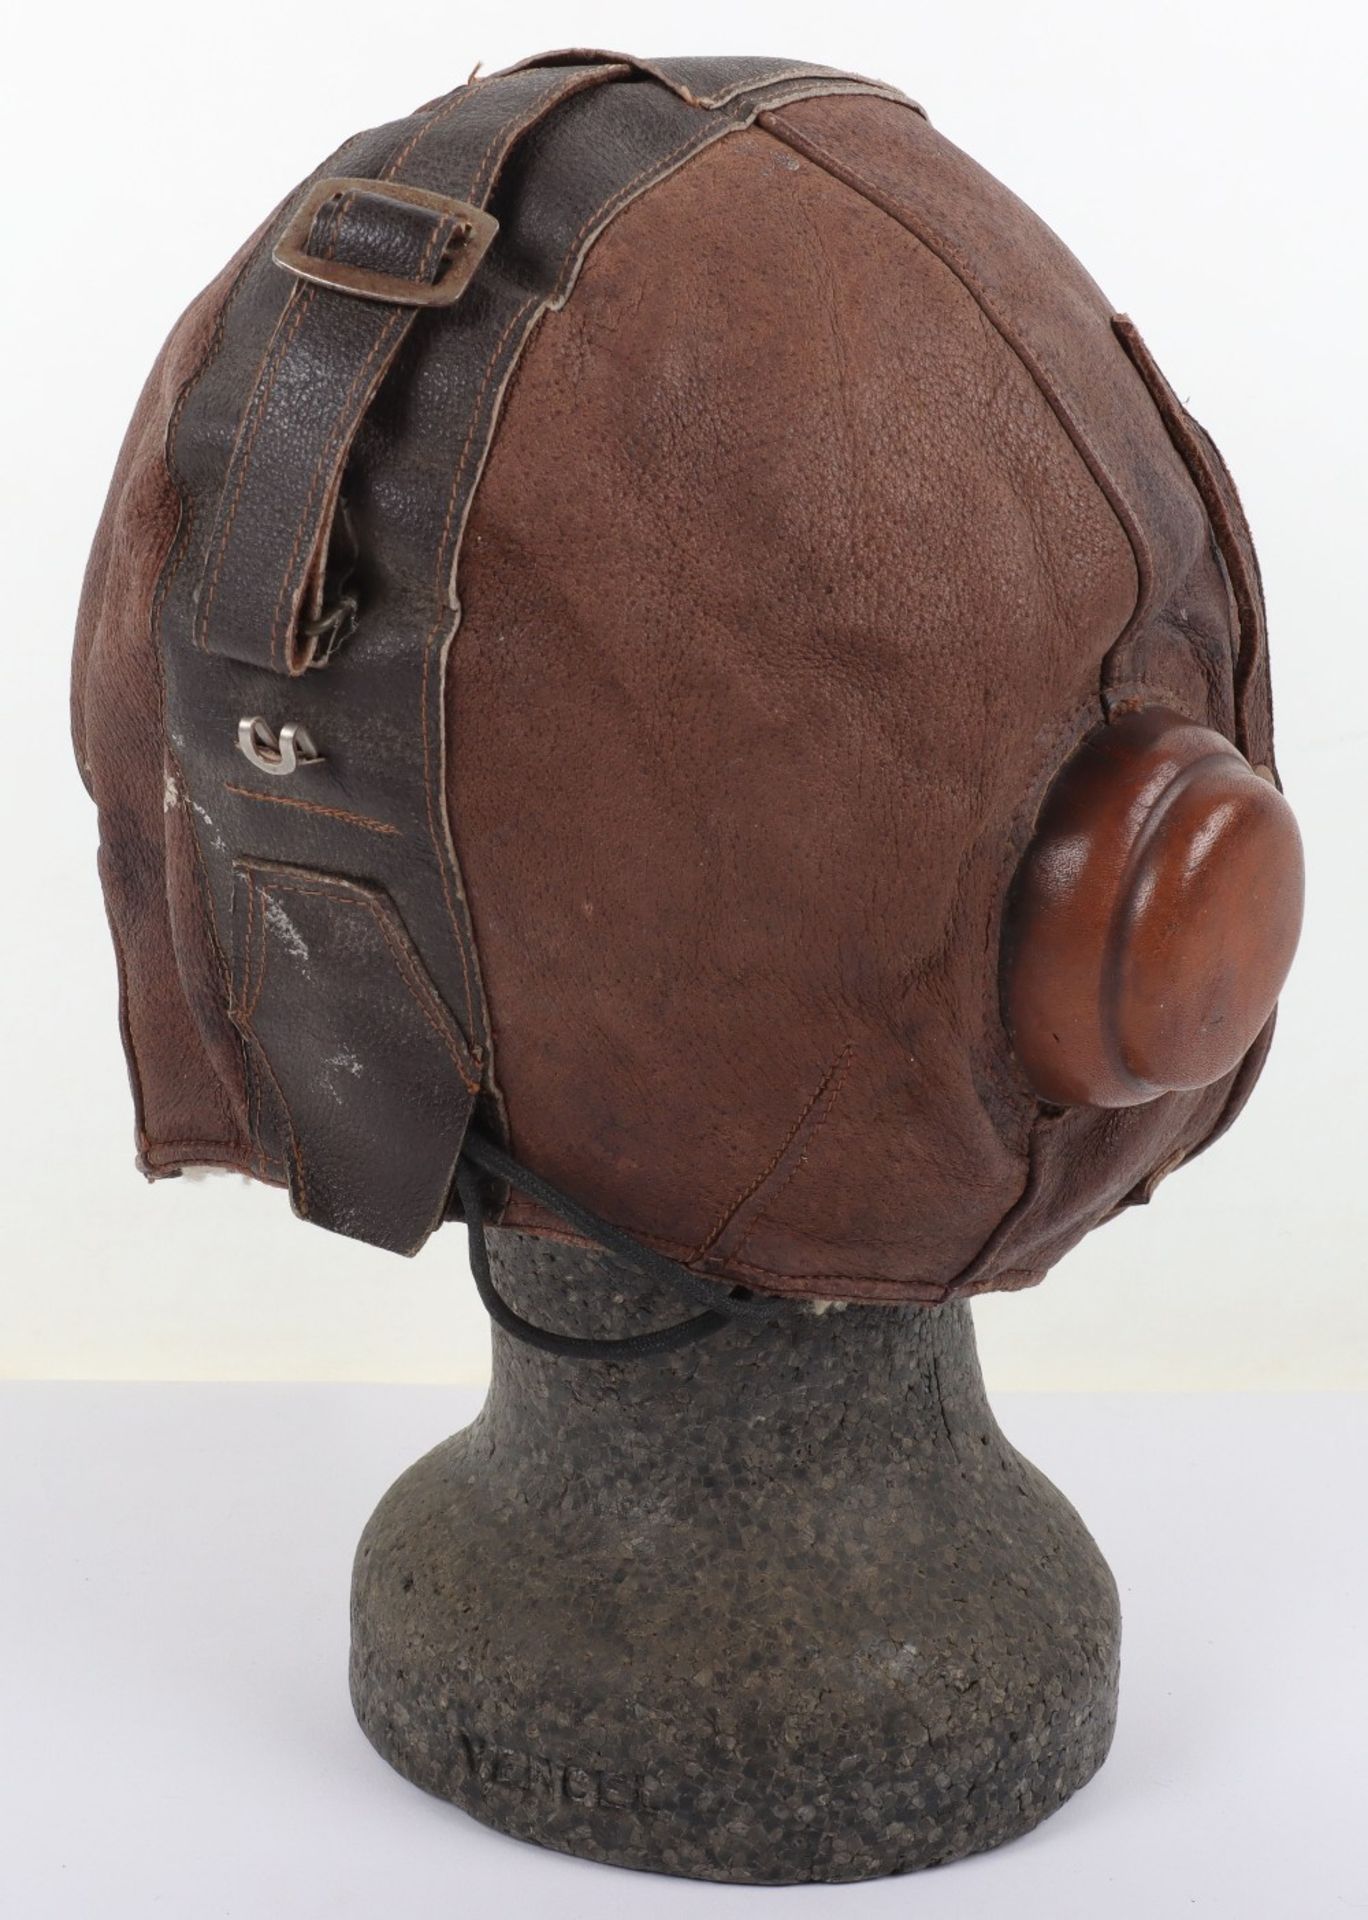 Leather Flying Helmet - Image 3 of 7